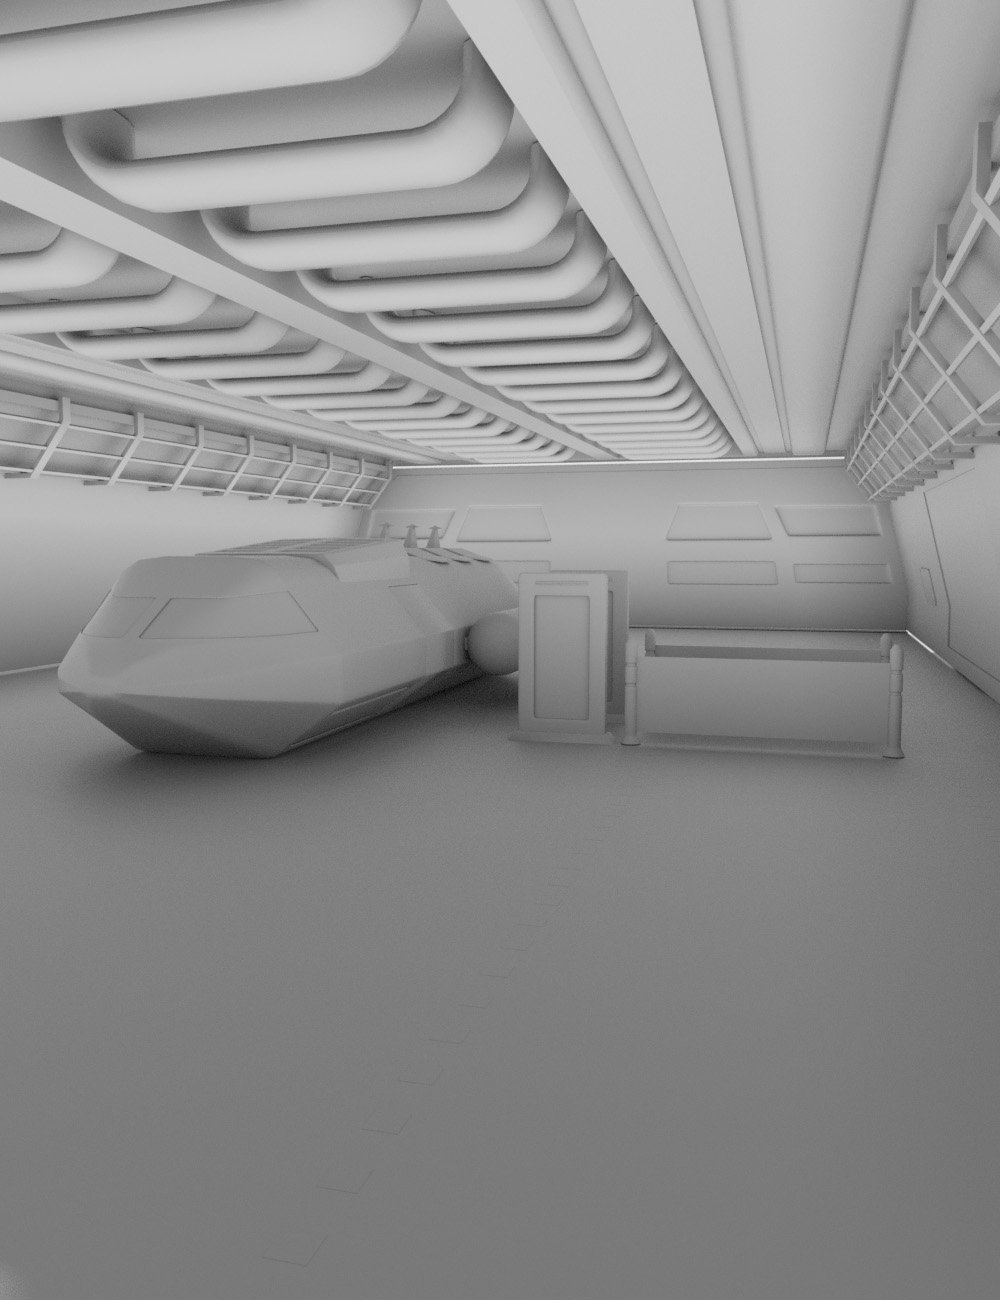 Sci-Fi Starship Shuttle Bay Volume 1 by: AcharyaPolina, 3D Models by Daz 3D